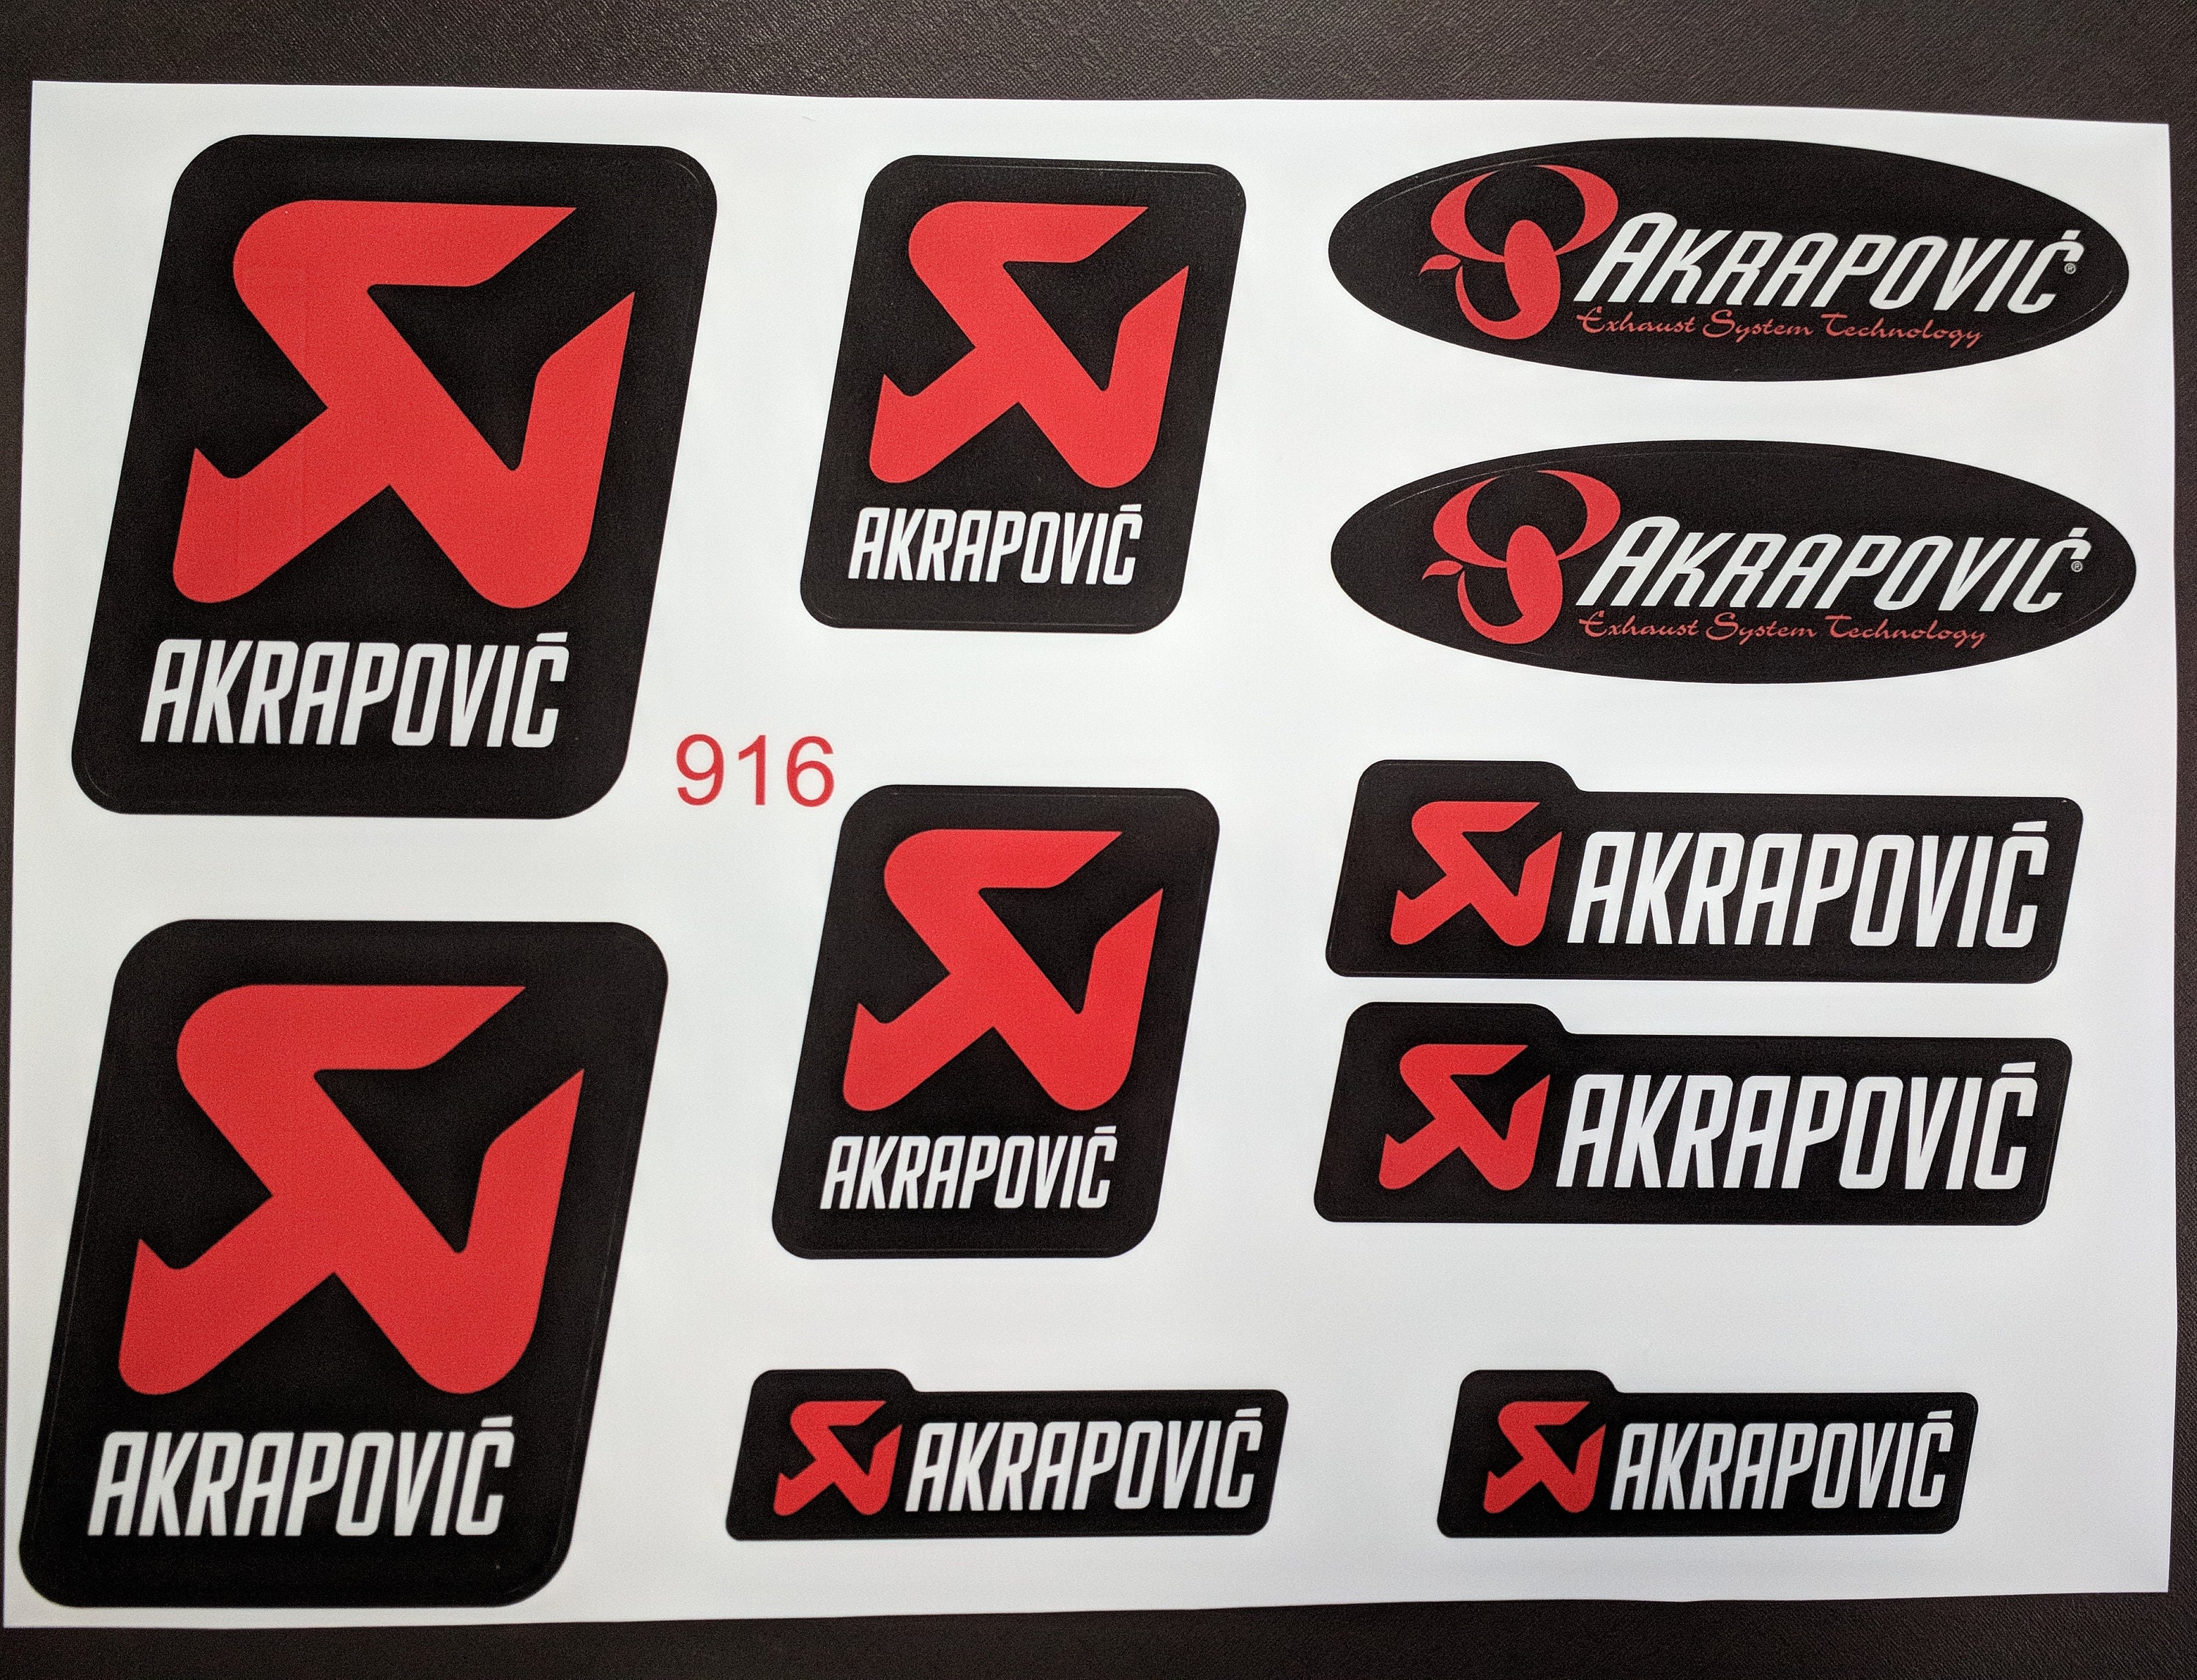 RINKON Akrapovic Sticker for Bike car Stickers Pack of 2 Vinyl